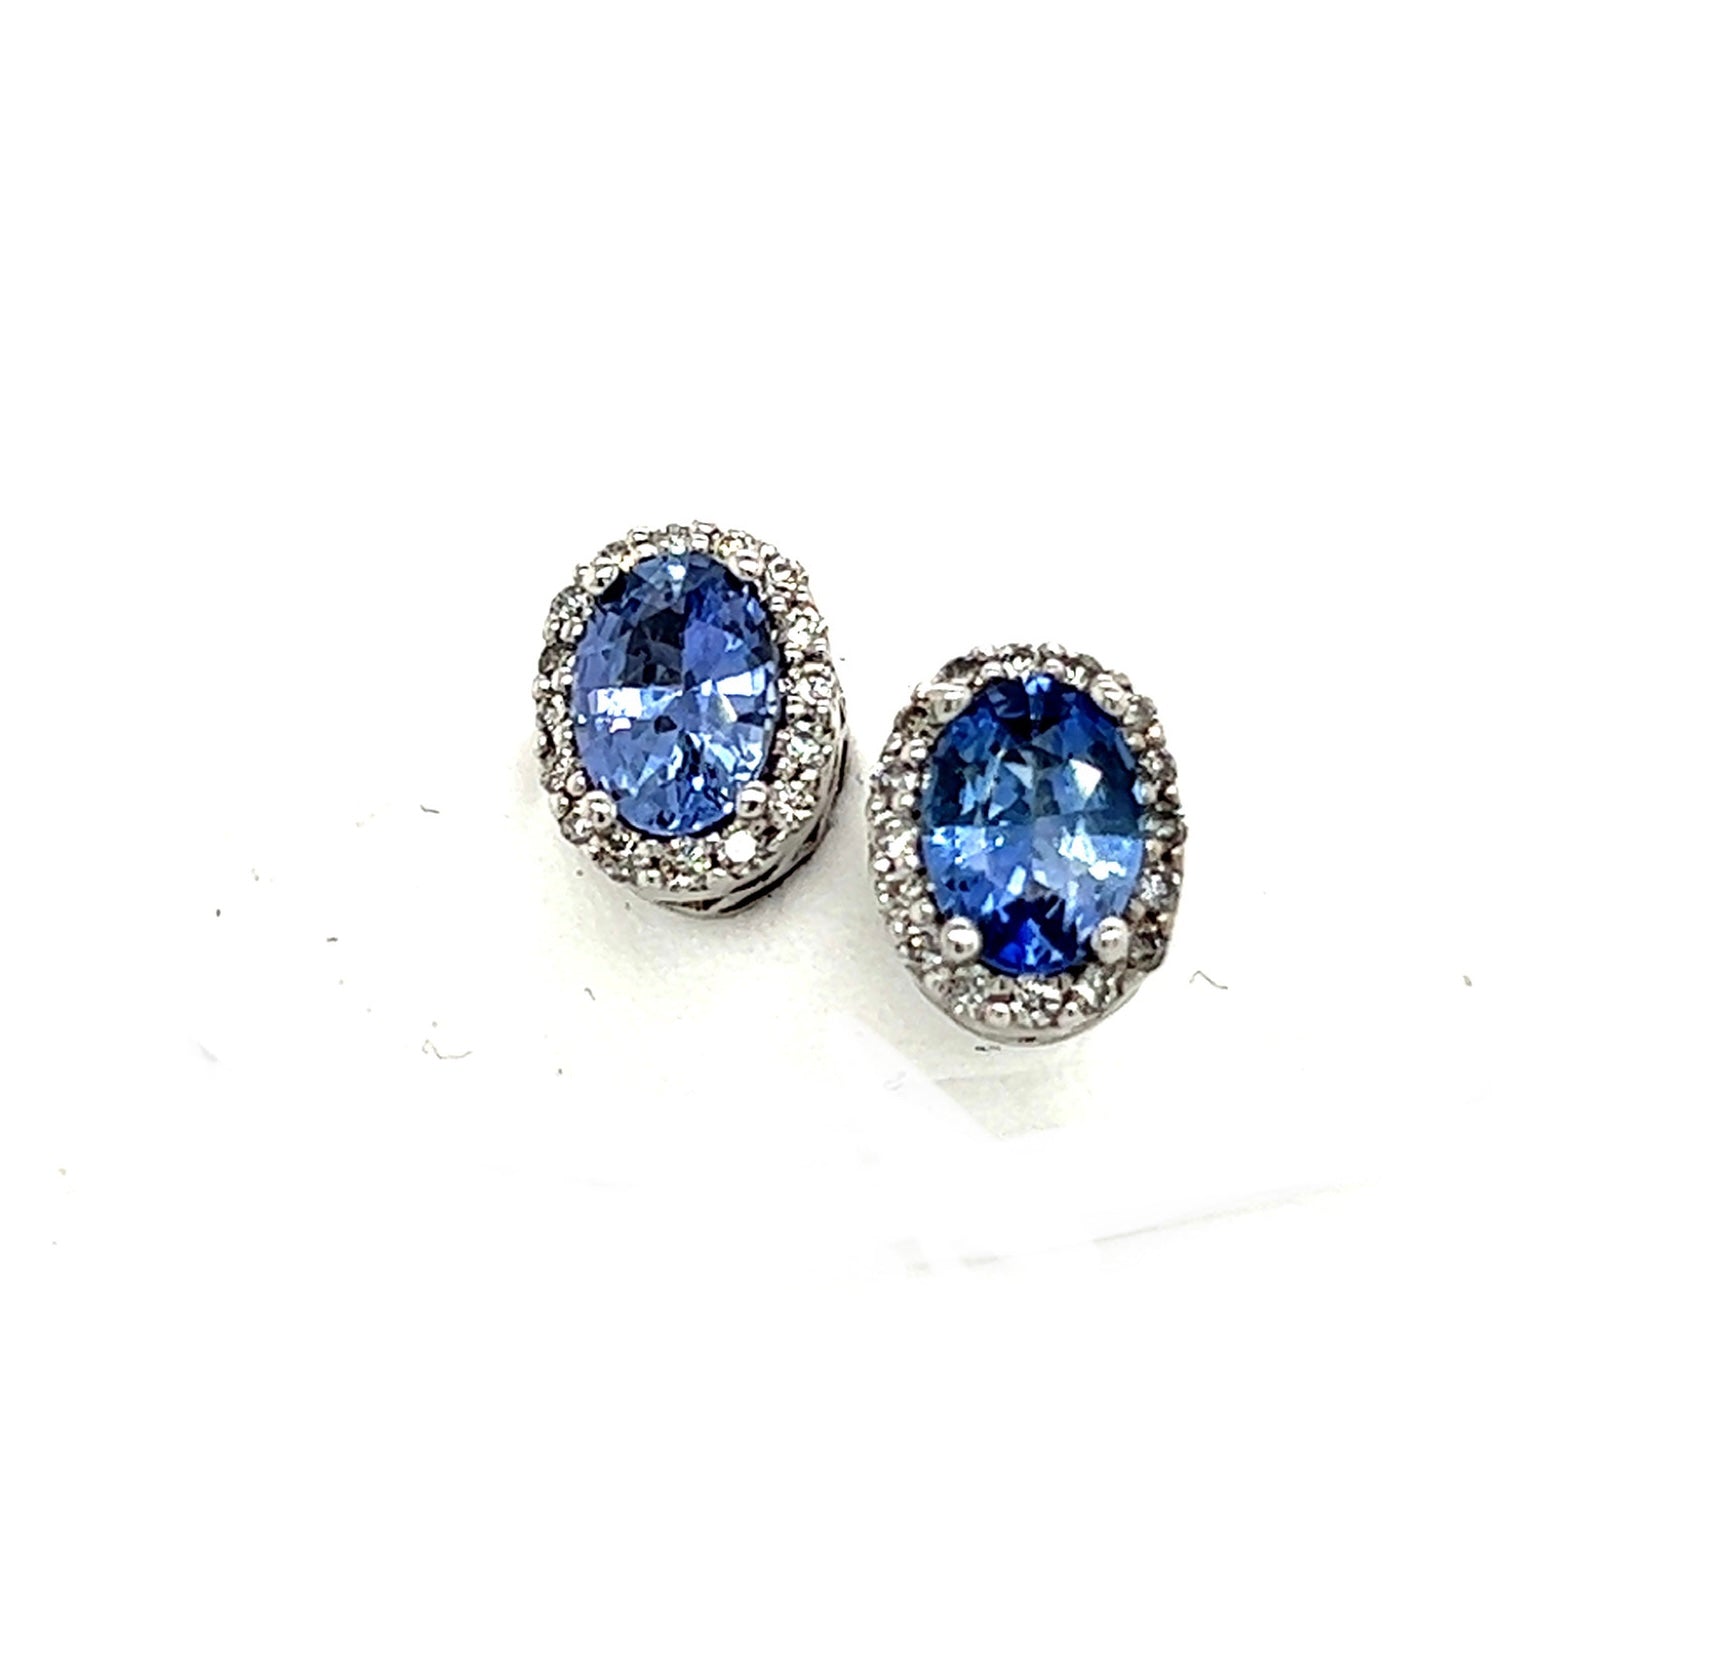 Natural Sapphire Diamond Earrings 14k Gold 1.73 TCW Certified $3,950 121272